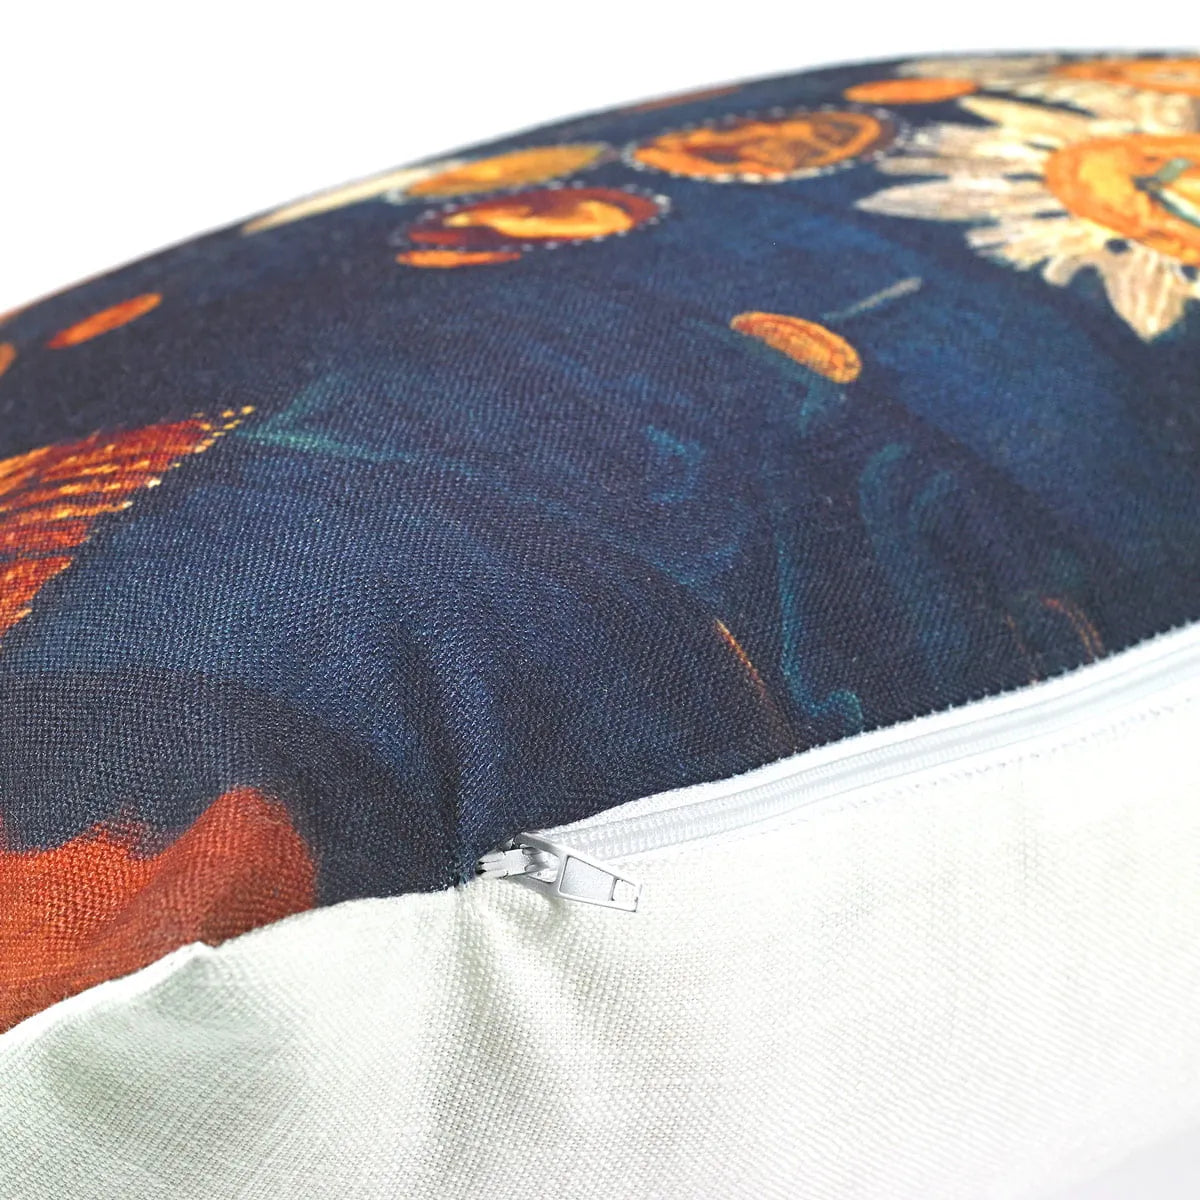 Honeysuckle 3 - William Morris Cushion - Decorative Throw Pillow - Throw Pillows - Aesthetic Art